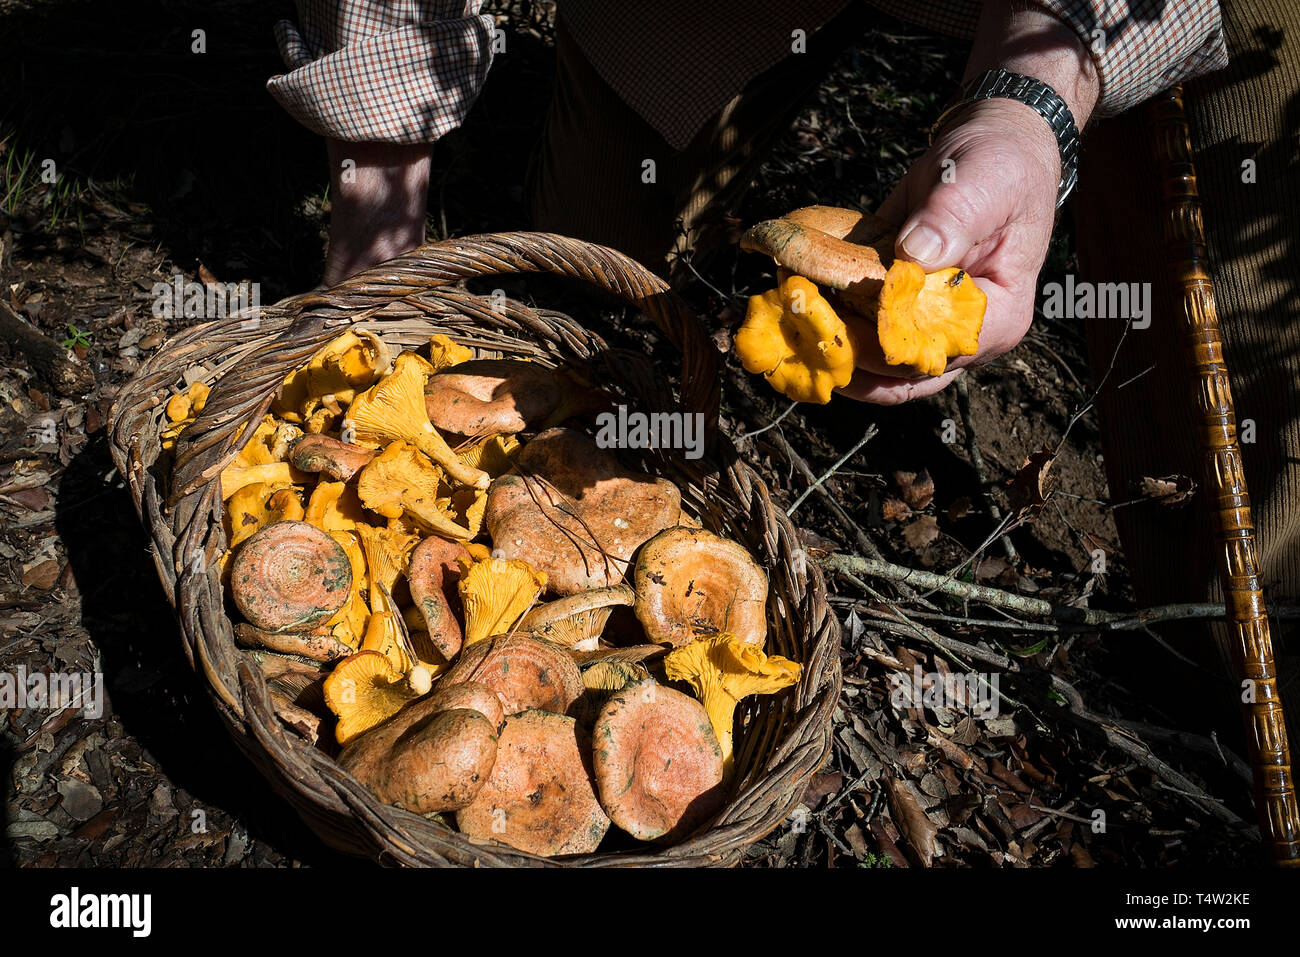 Bolataire, mushroom-pickers, with mushrooms. Pineda de Mar. Catalunya. Spain Stock Photo